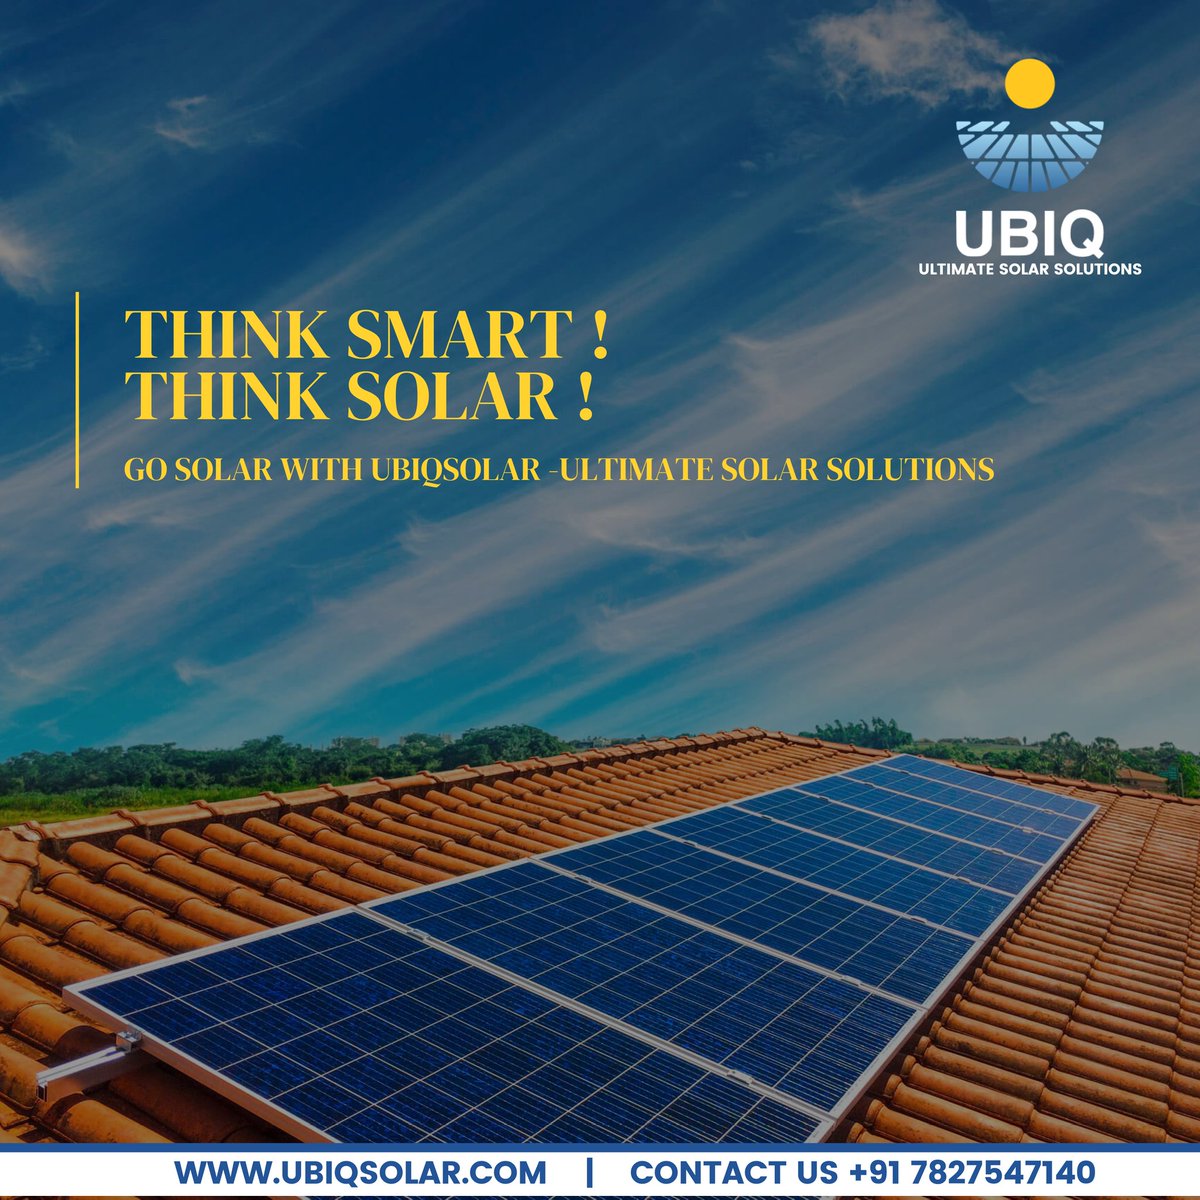 Think smart! 
Think solar! 
Go solar with ubiqsolar now 
7827547140

#ubiqsolar #revolution  #solar #solarpanels #sun #energy #renewableenergy #solarenergy #thinksolar #thinksmart